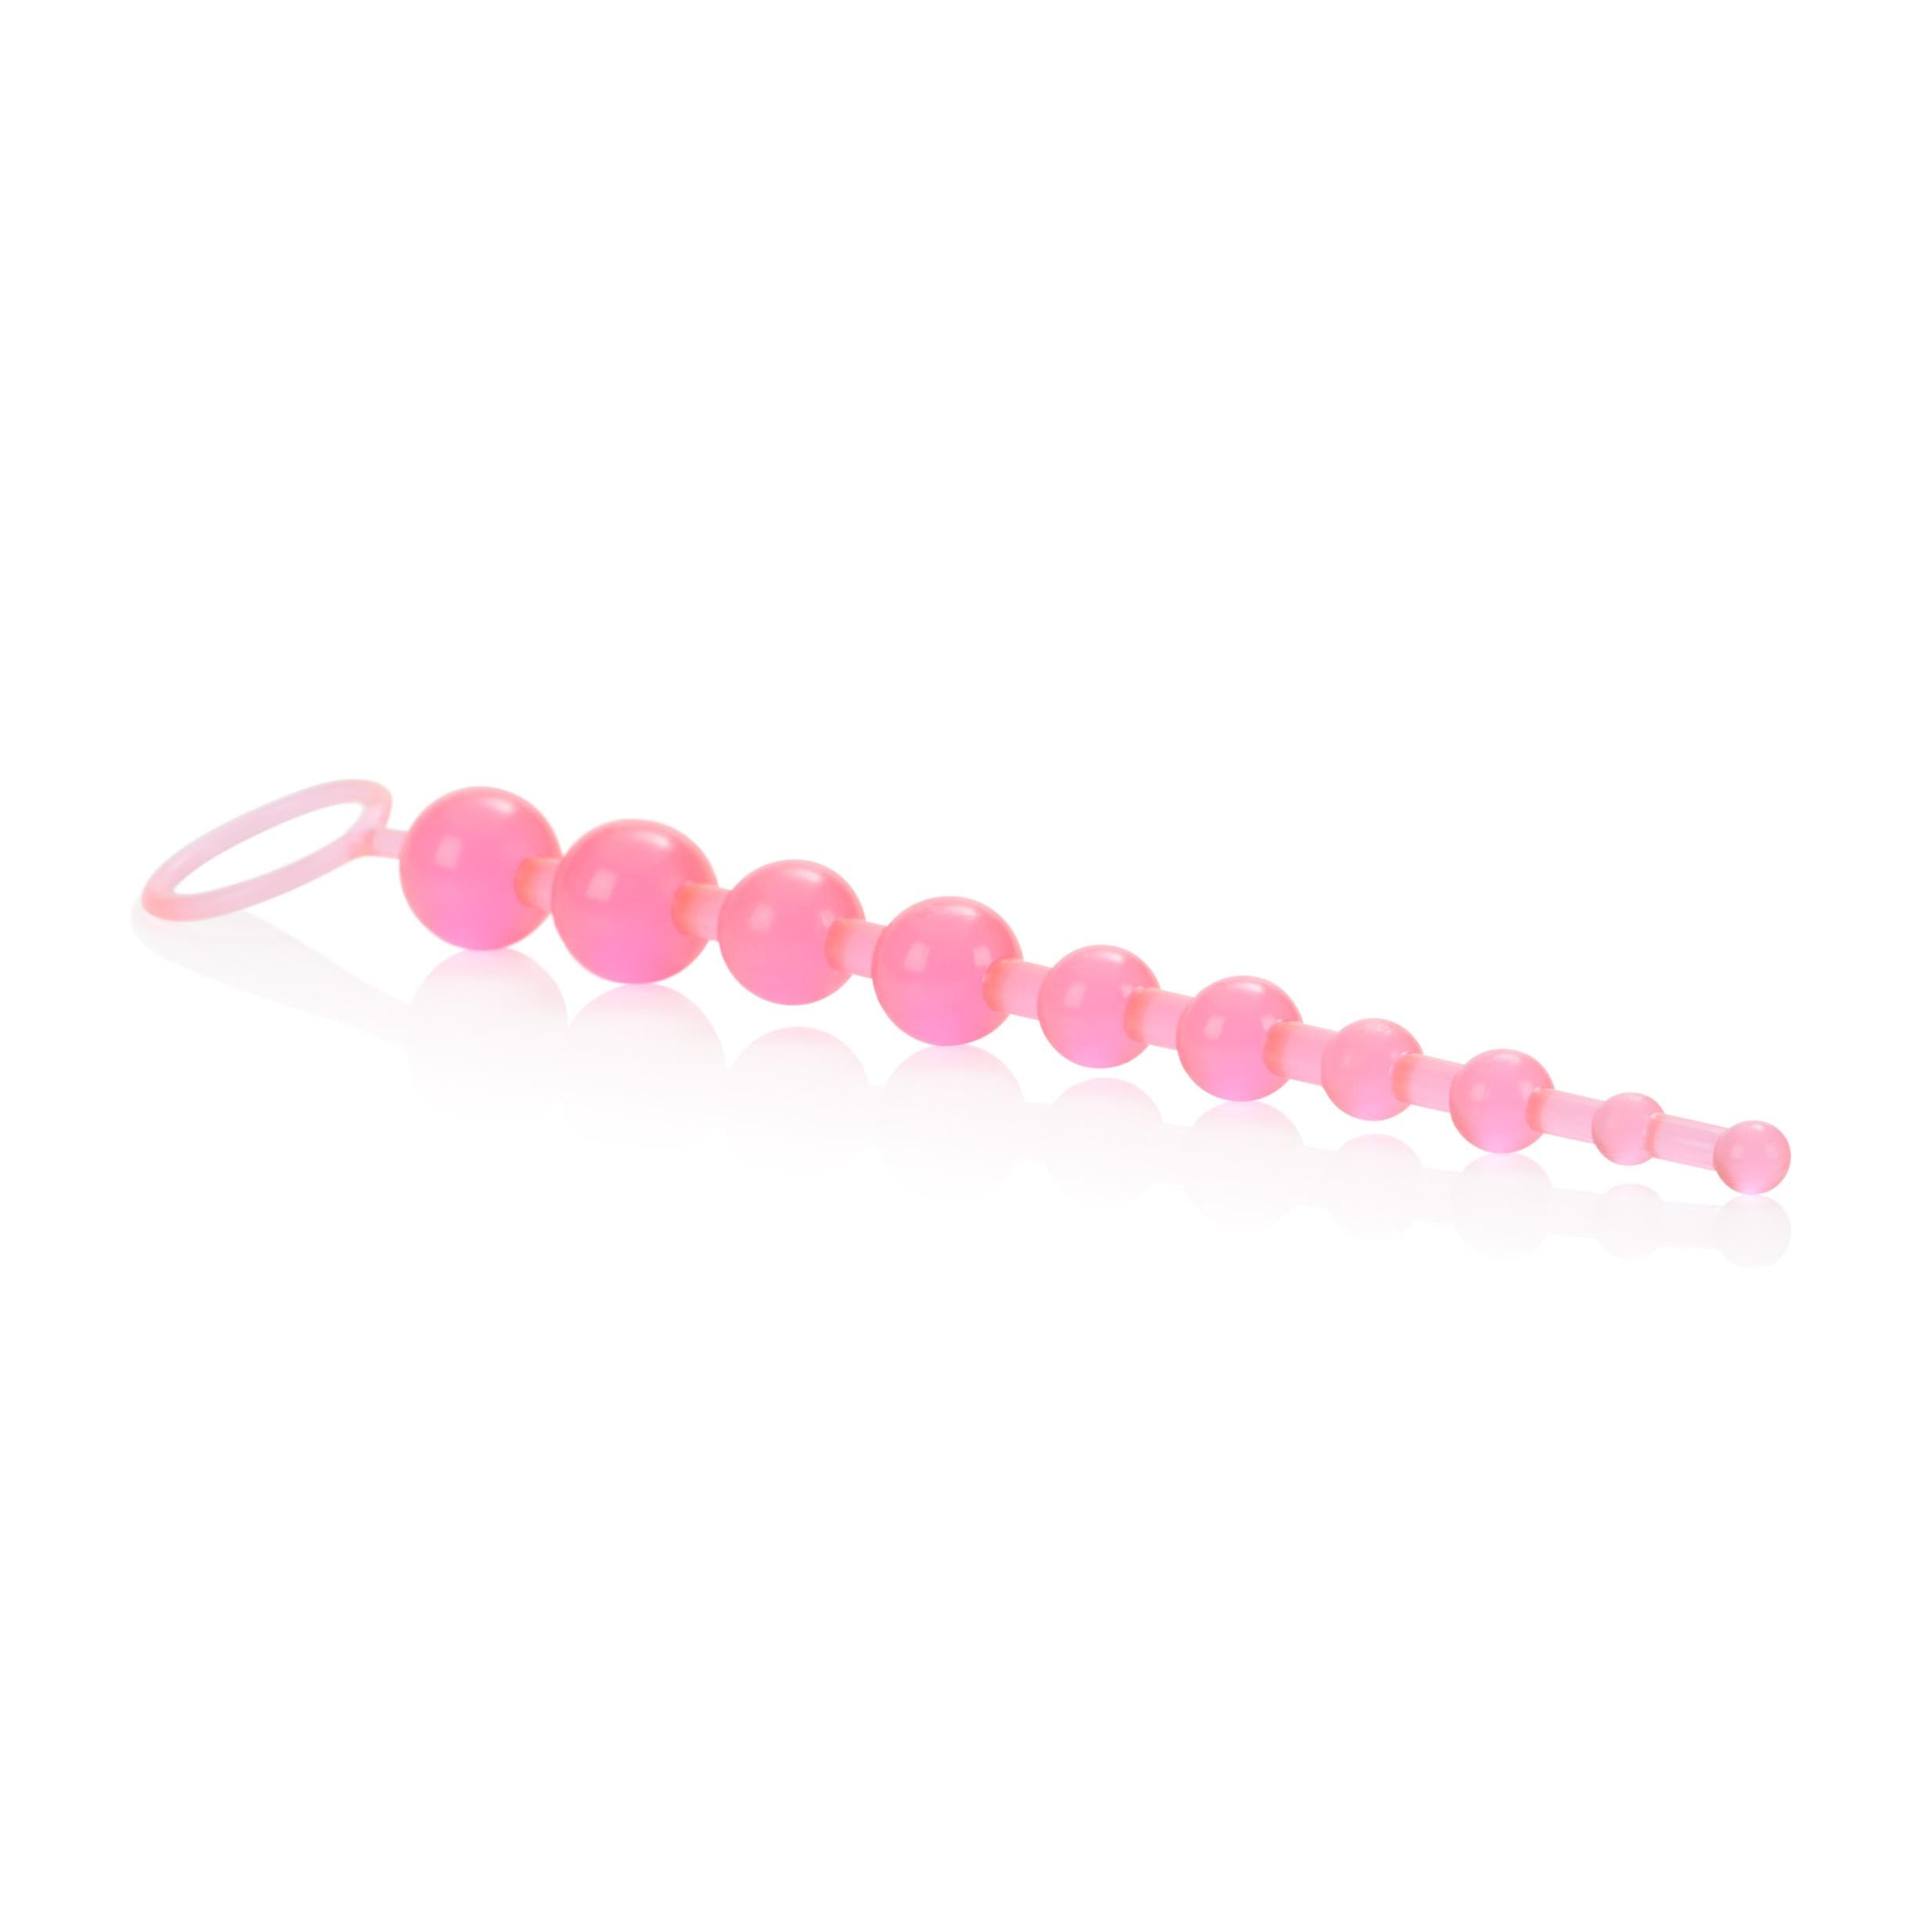 X-10 Beads - Pink Pink